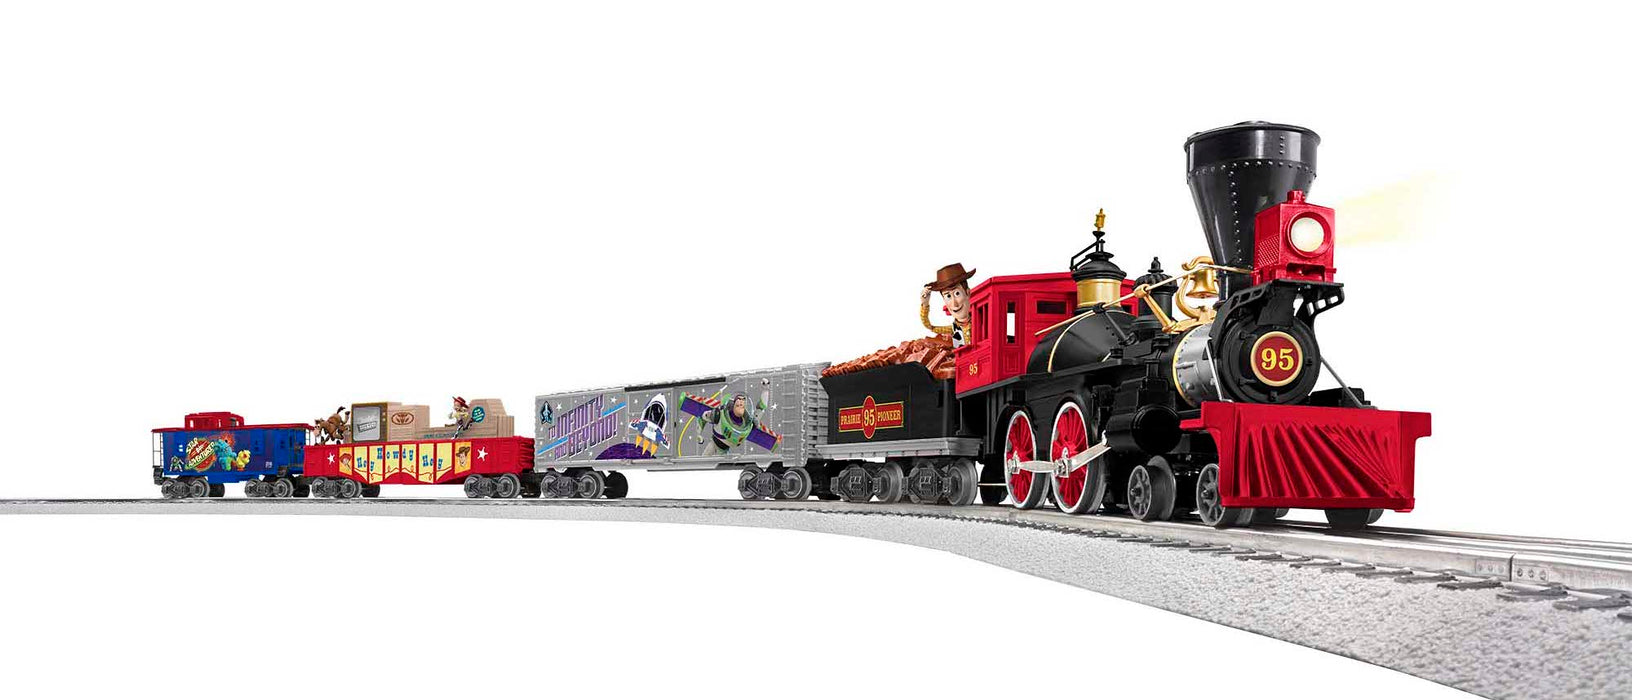 Lionel 2023110 O Gauge LionChief Toy Story Train Set